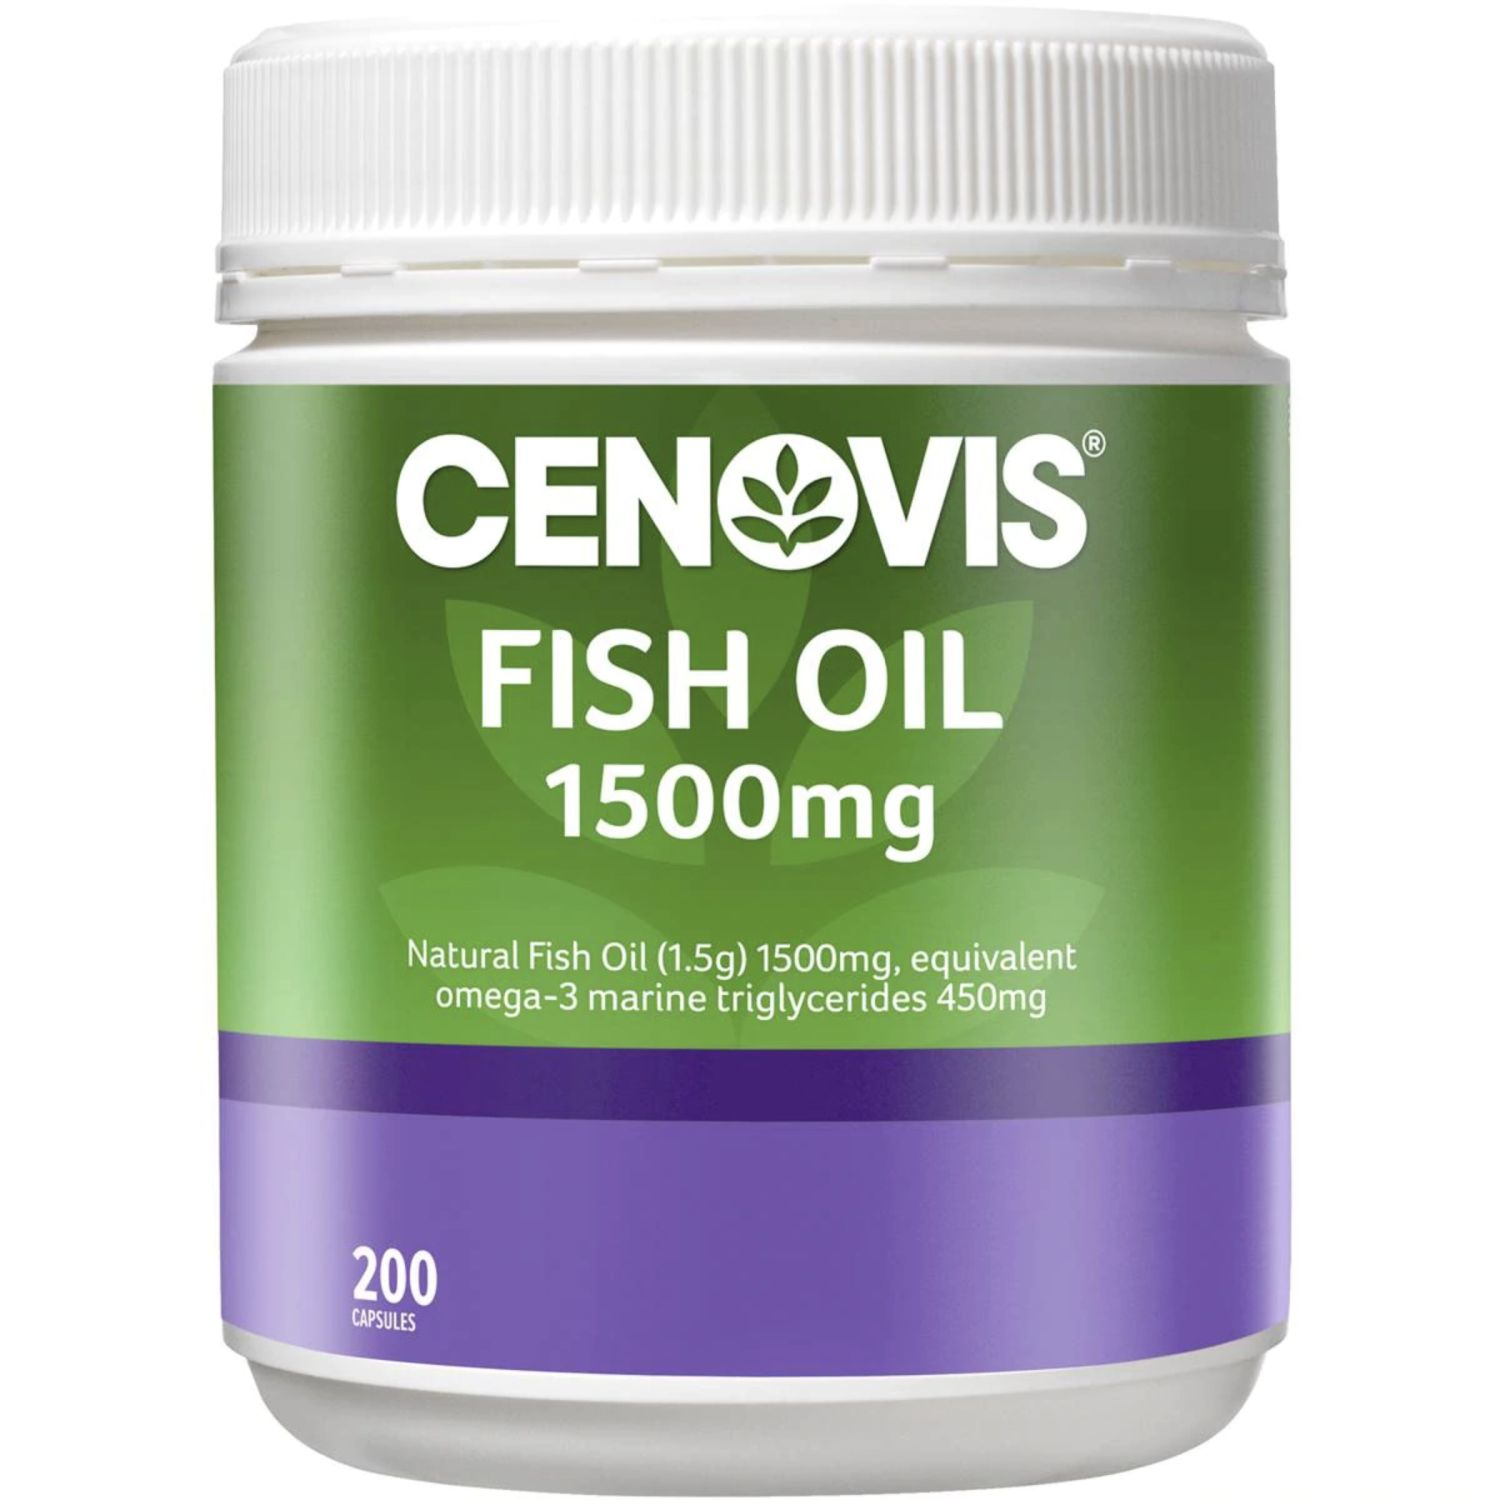 Cenovis Fish Oil 1500mg, 200 Each